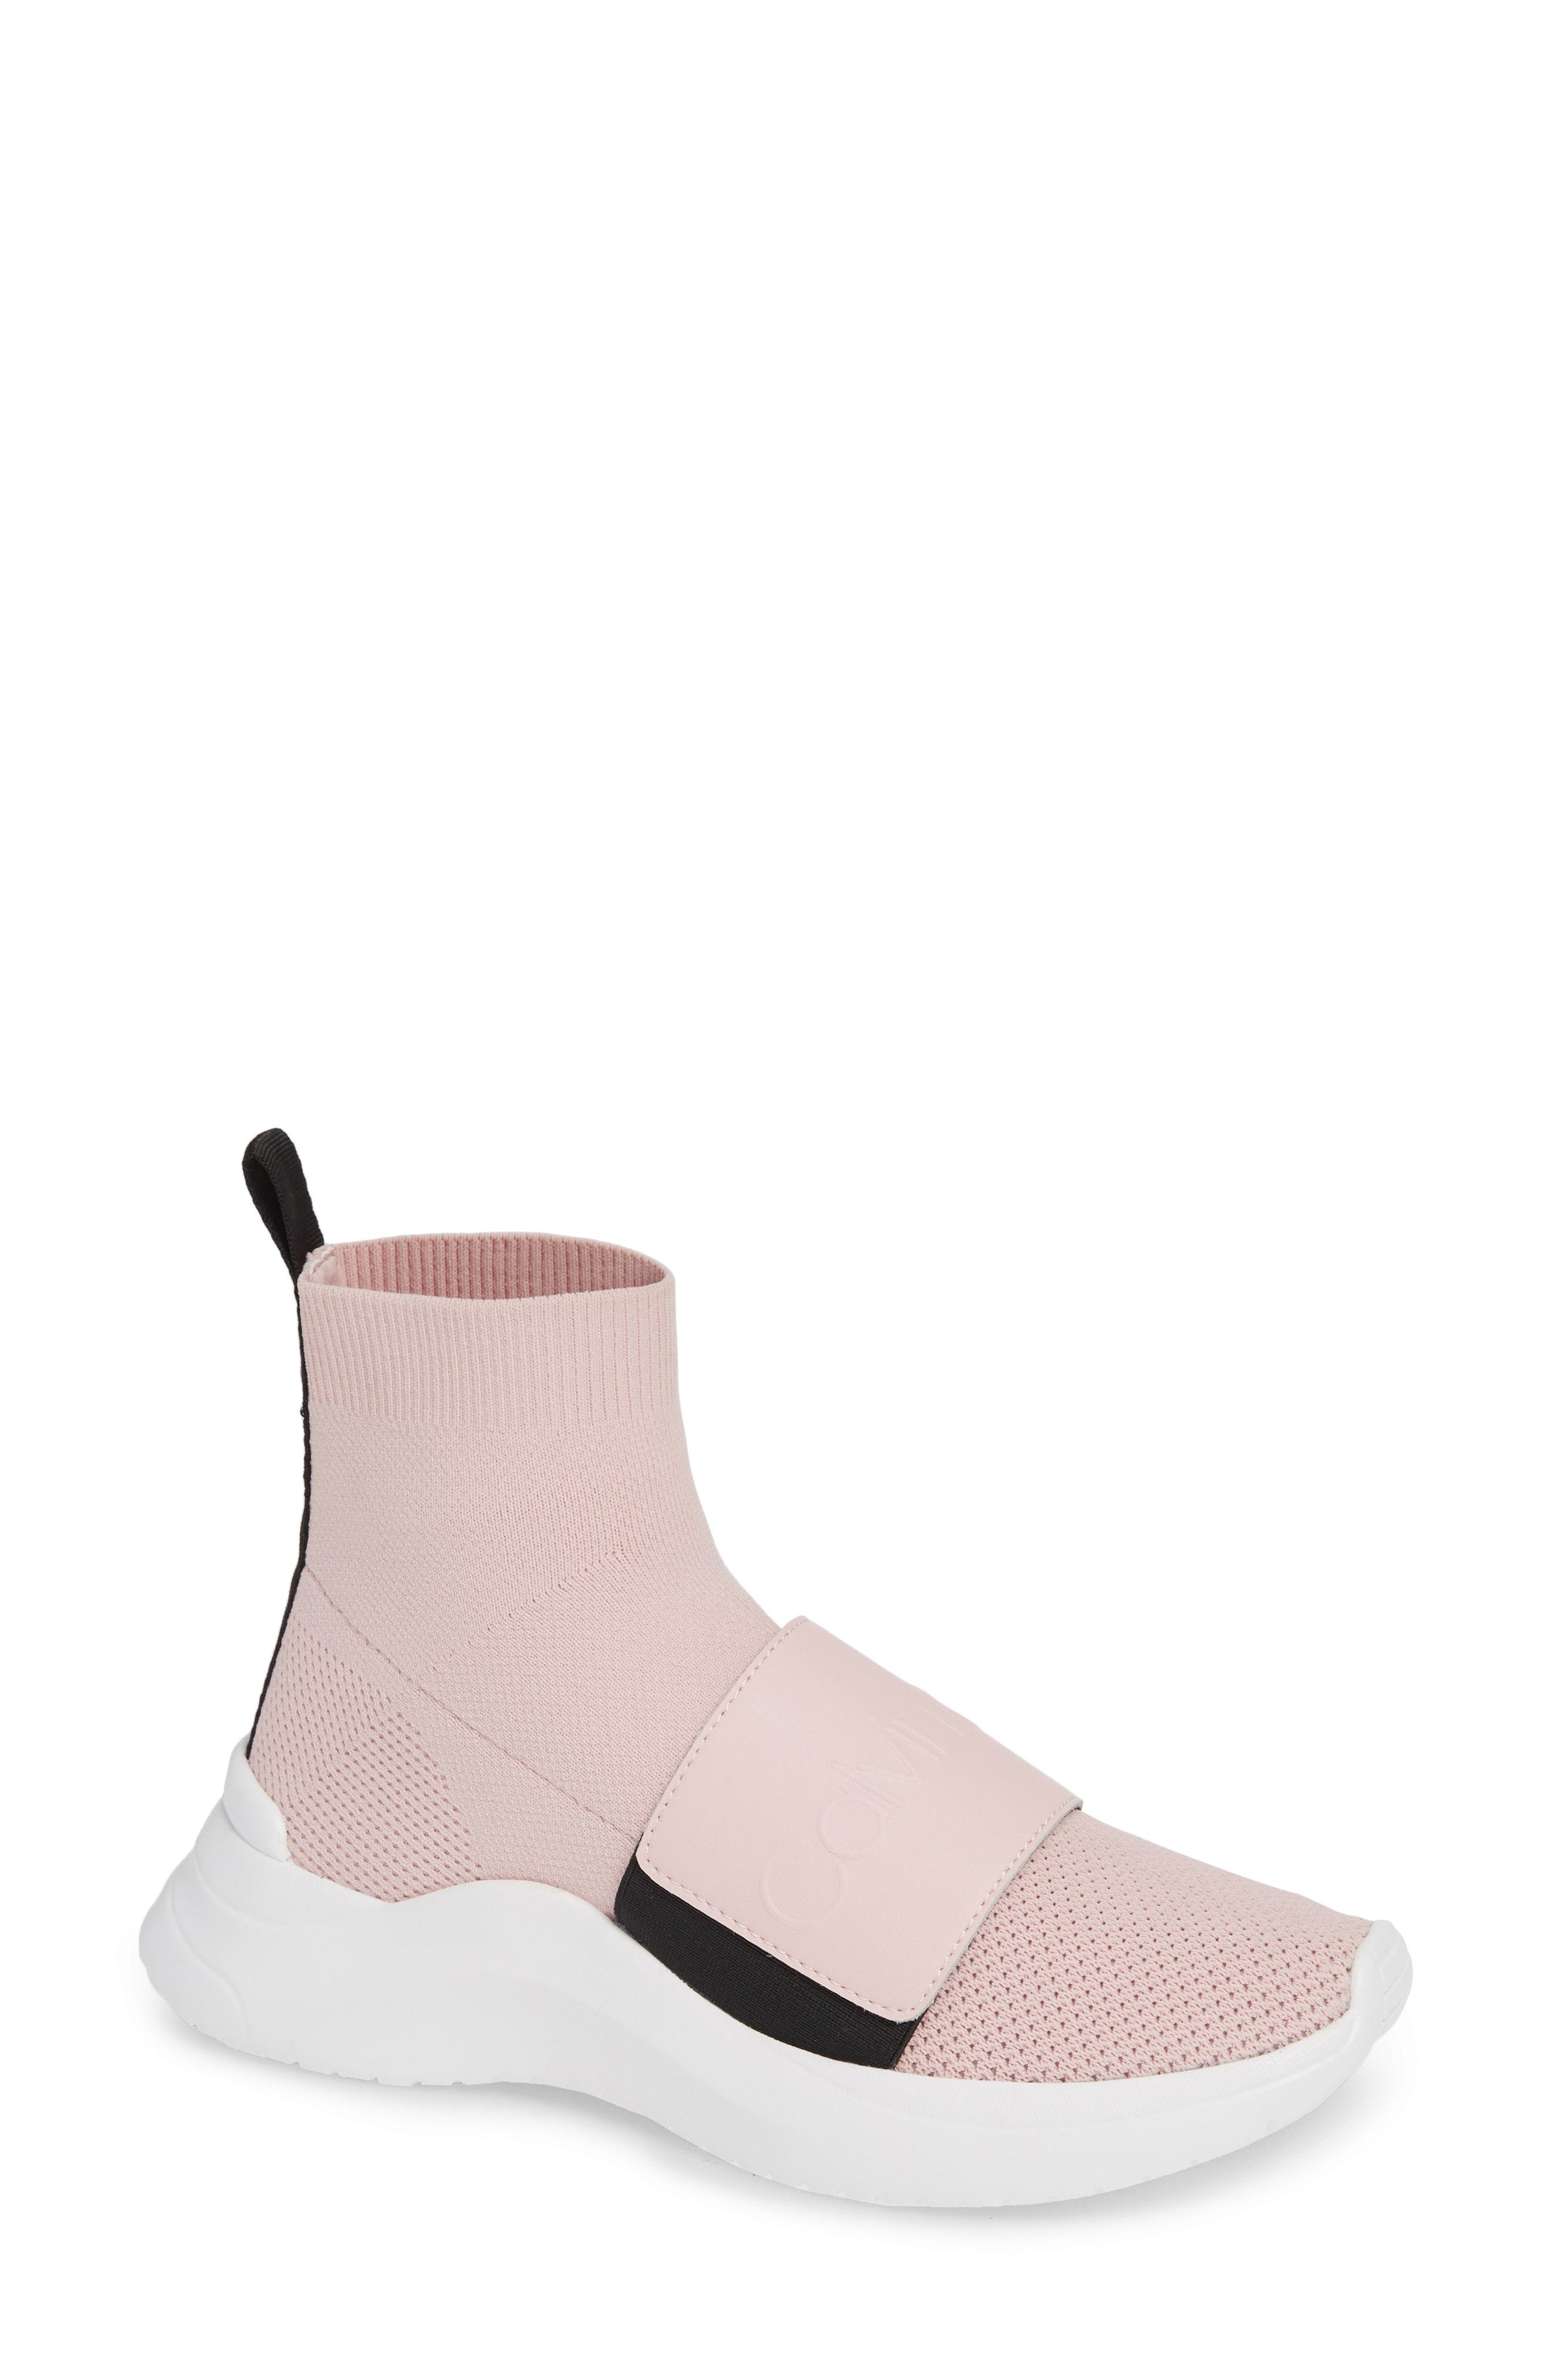 Calvin Klein Uni Sock Knit Sneaker, $83 